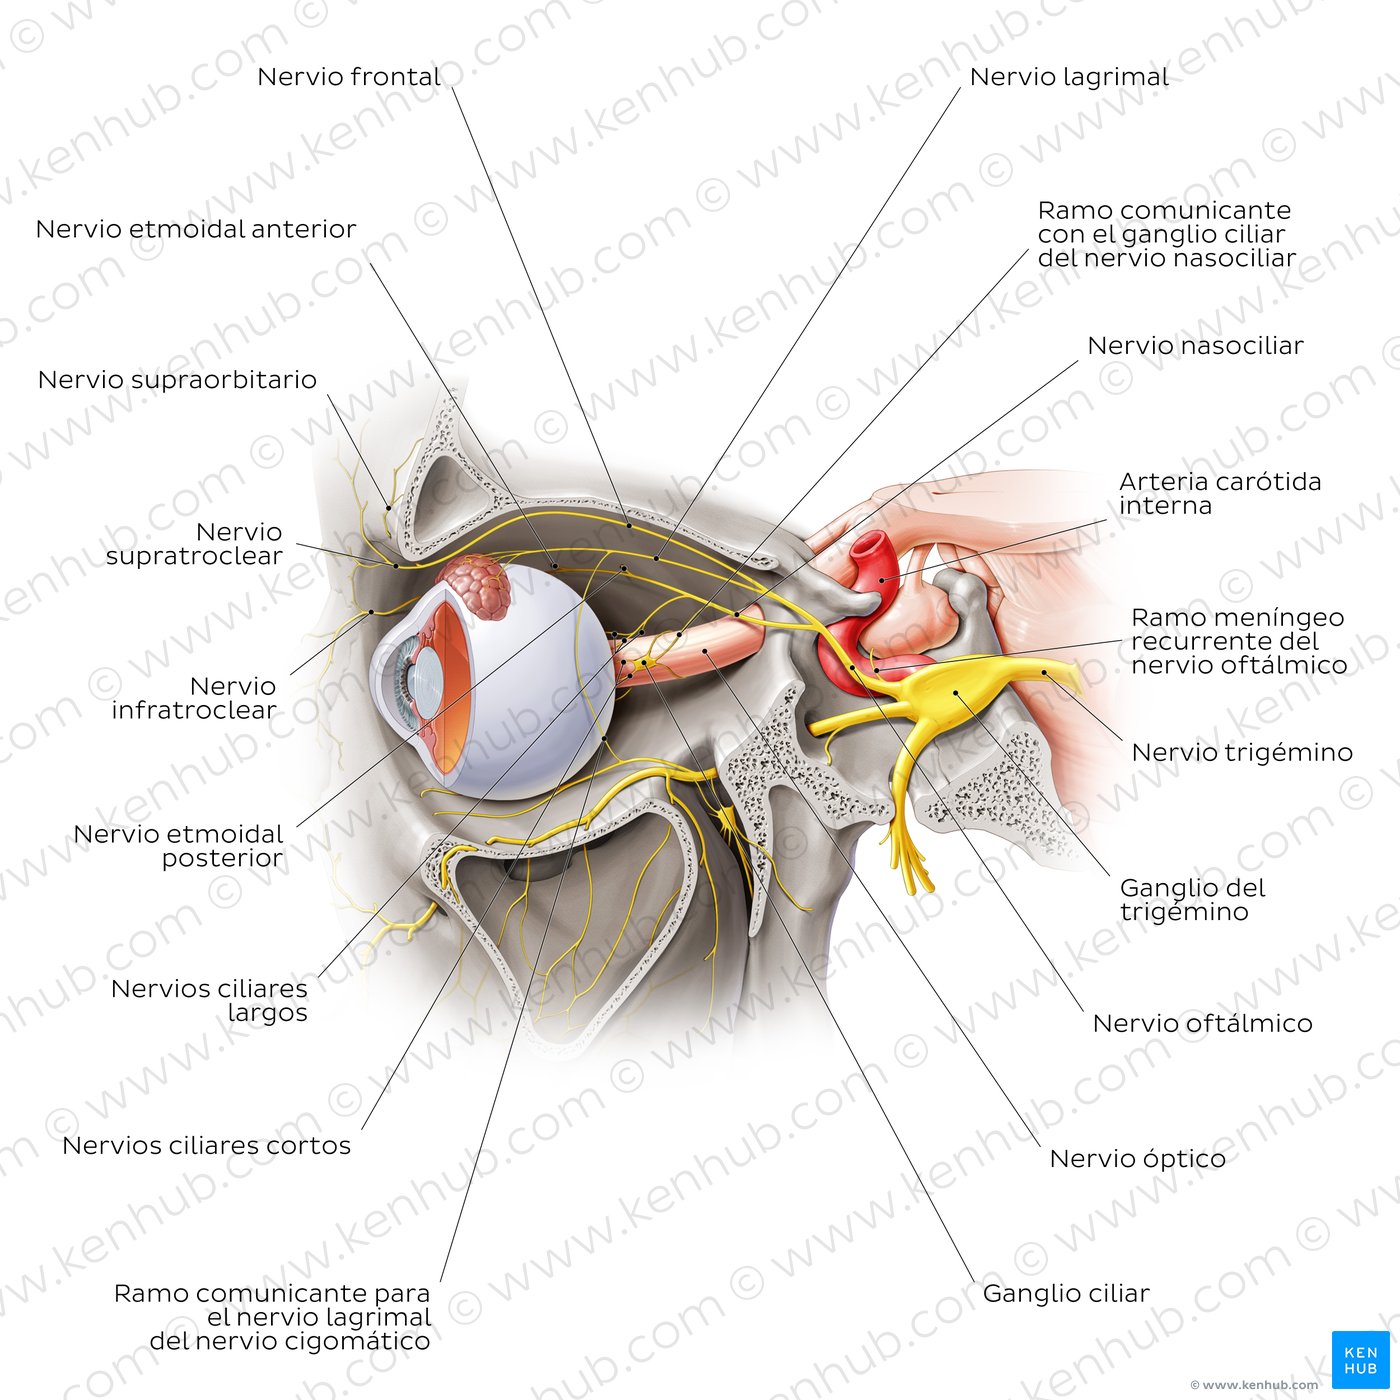 Nervio oftálmico (V1)